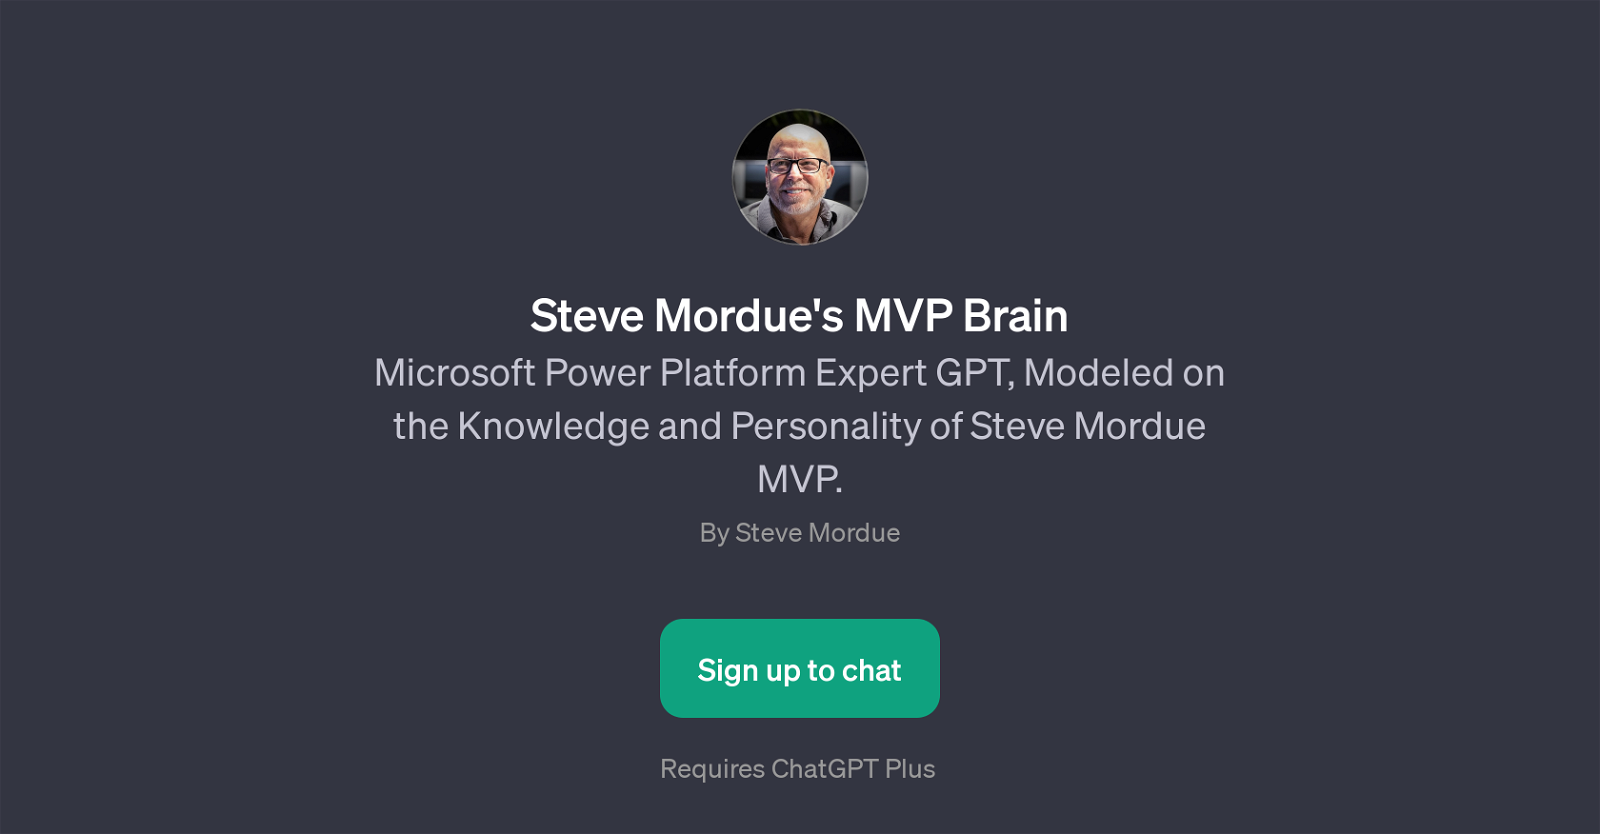 Steve Mordue's MVP Brain website